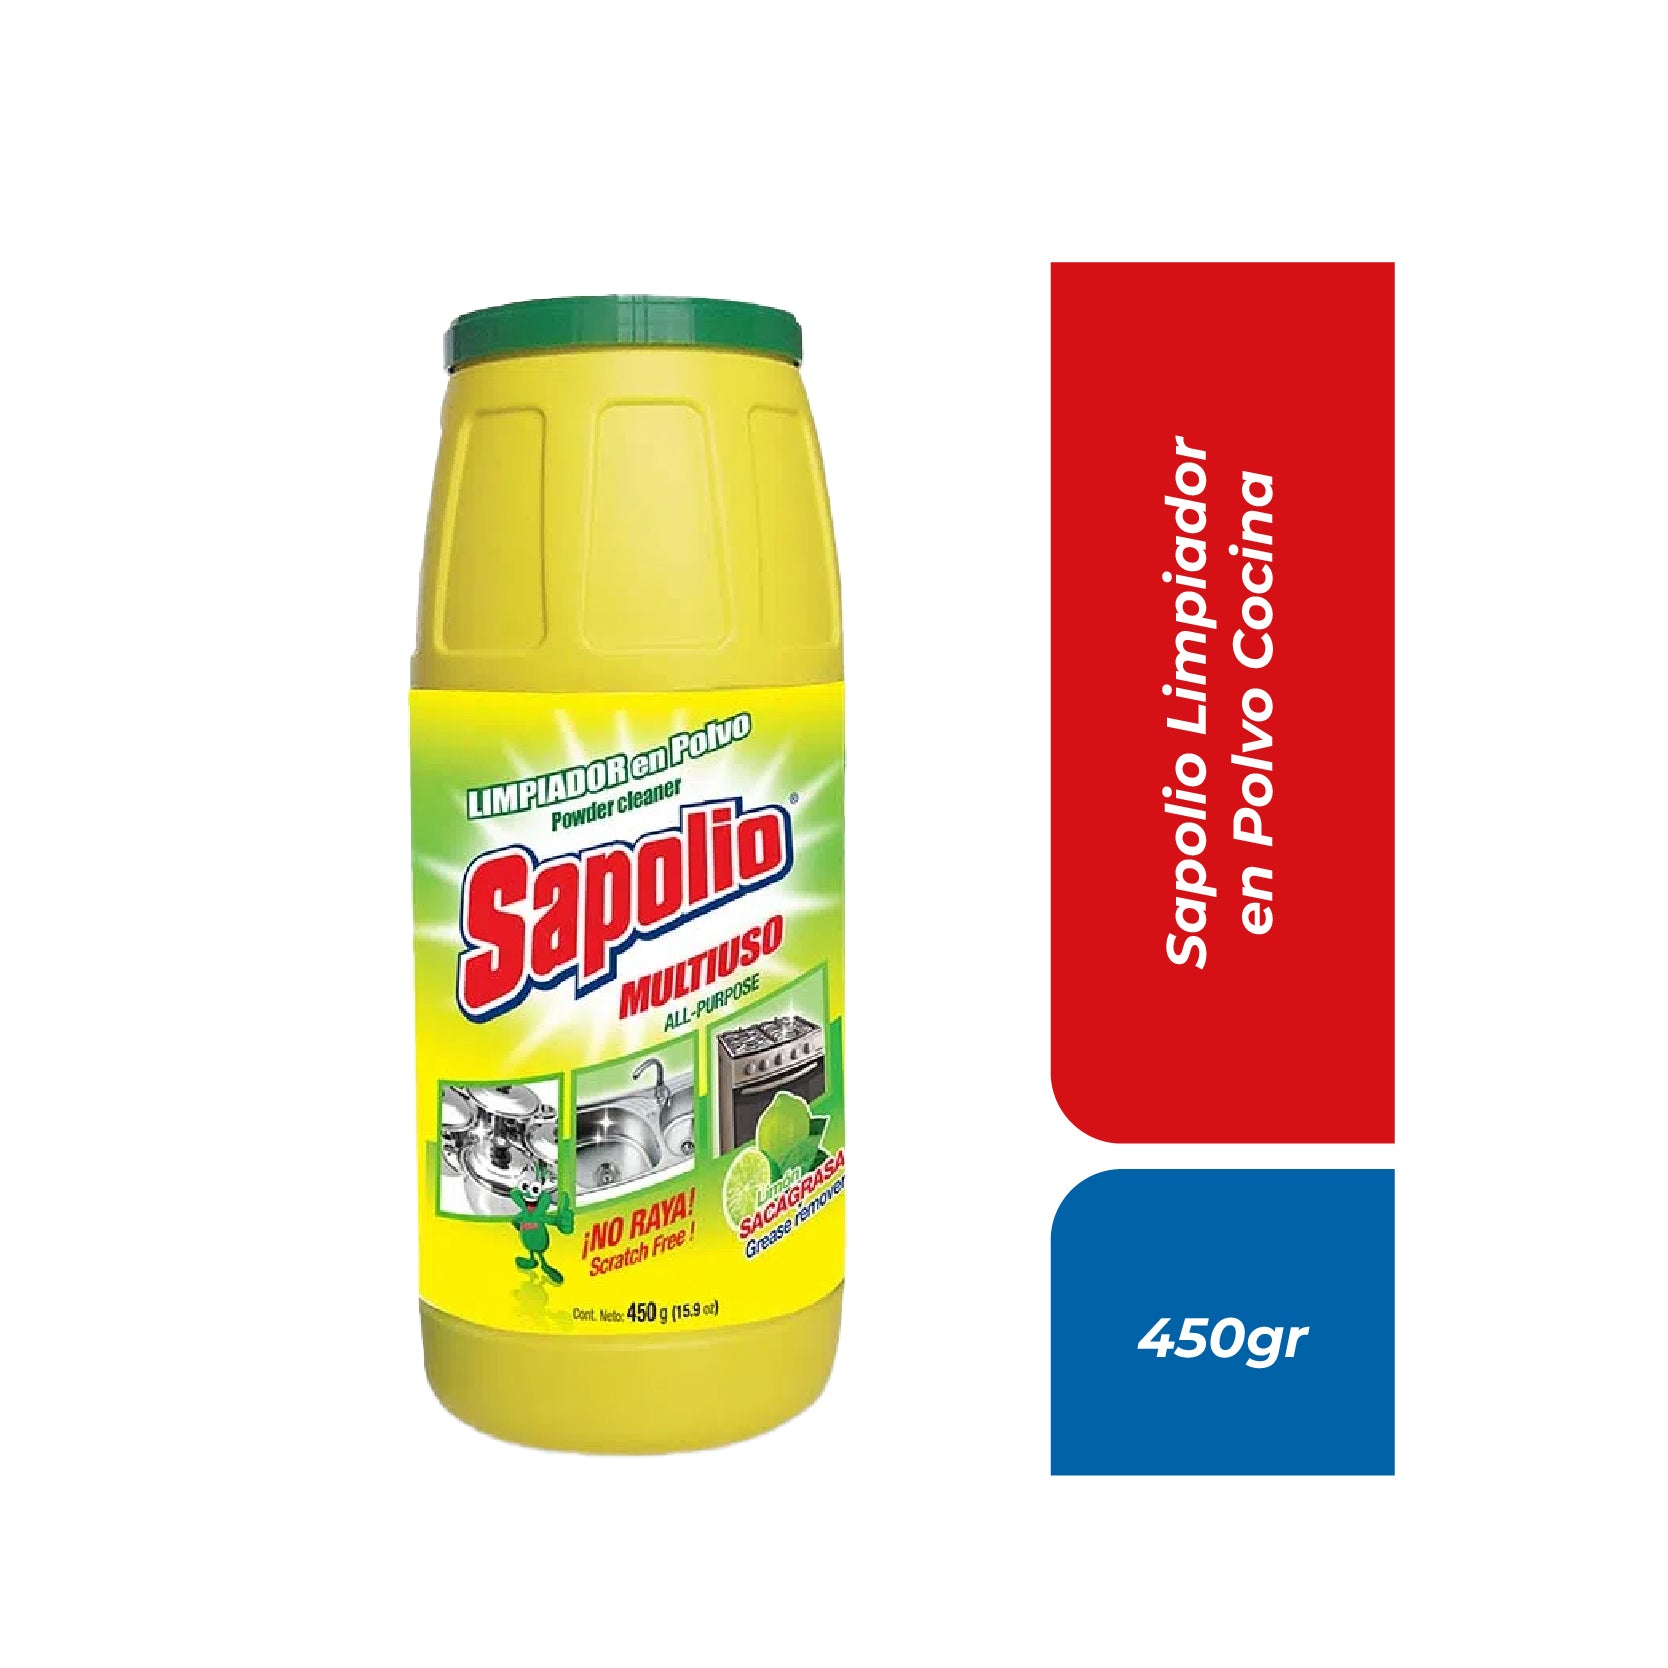 Sapolio Limpiador en Polvo Cocina 450gr